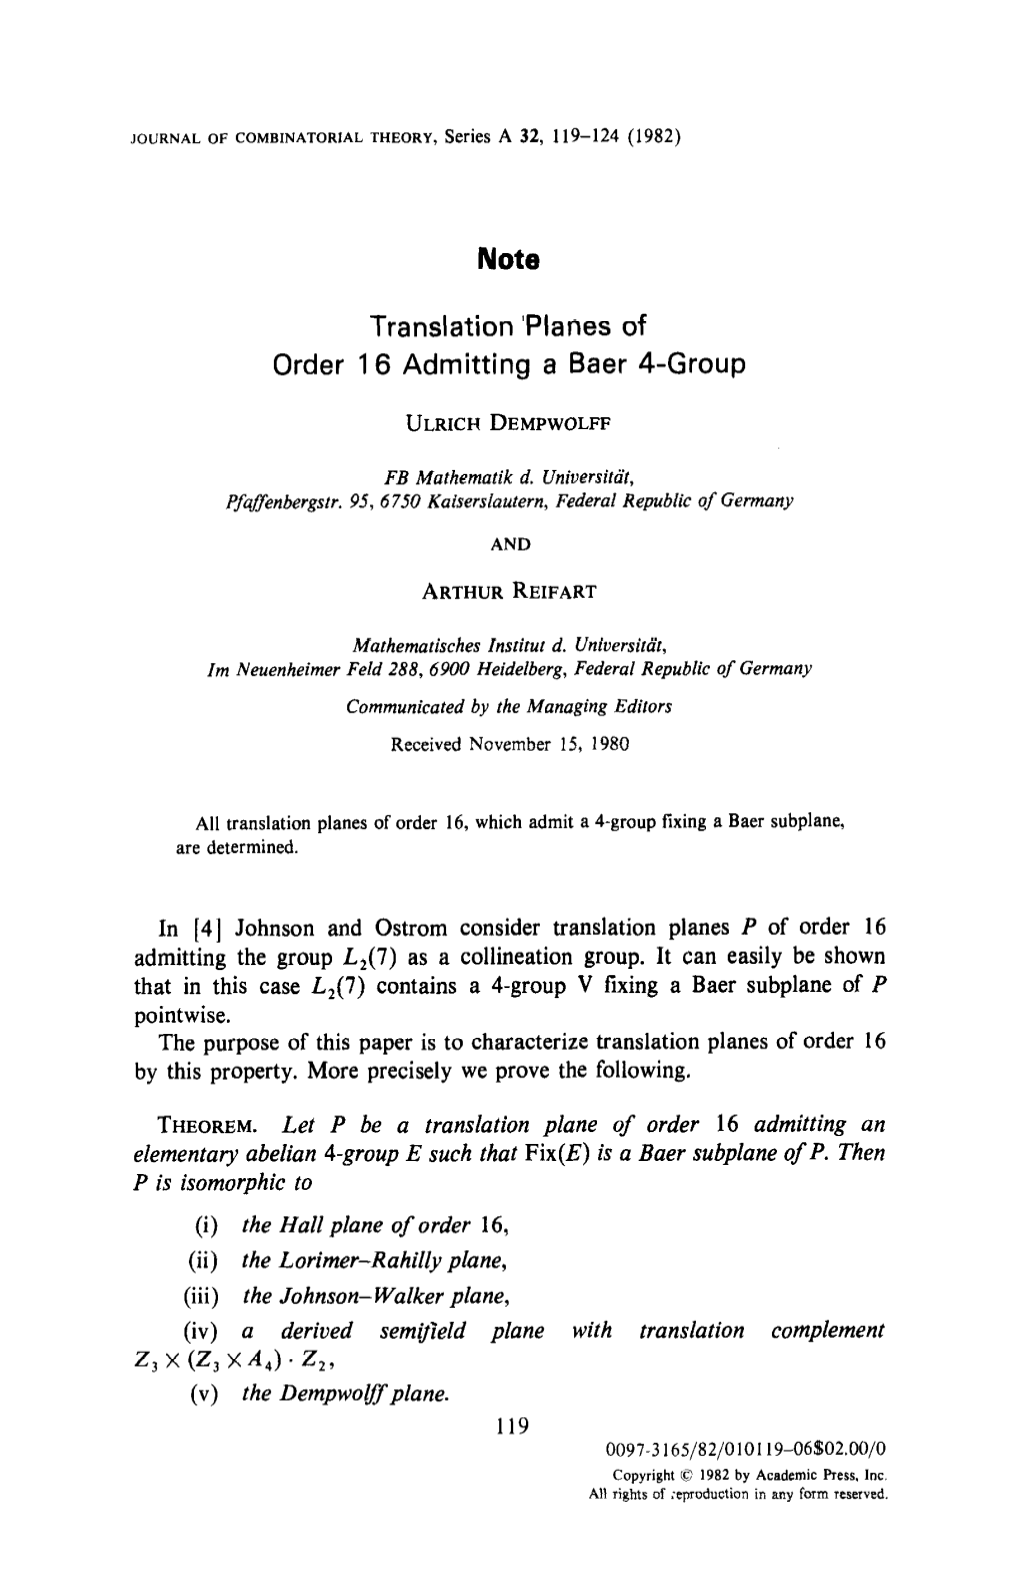 Translation 'Planes of Order 16 Admitting a Baer 4-Group